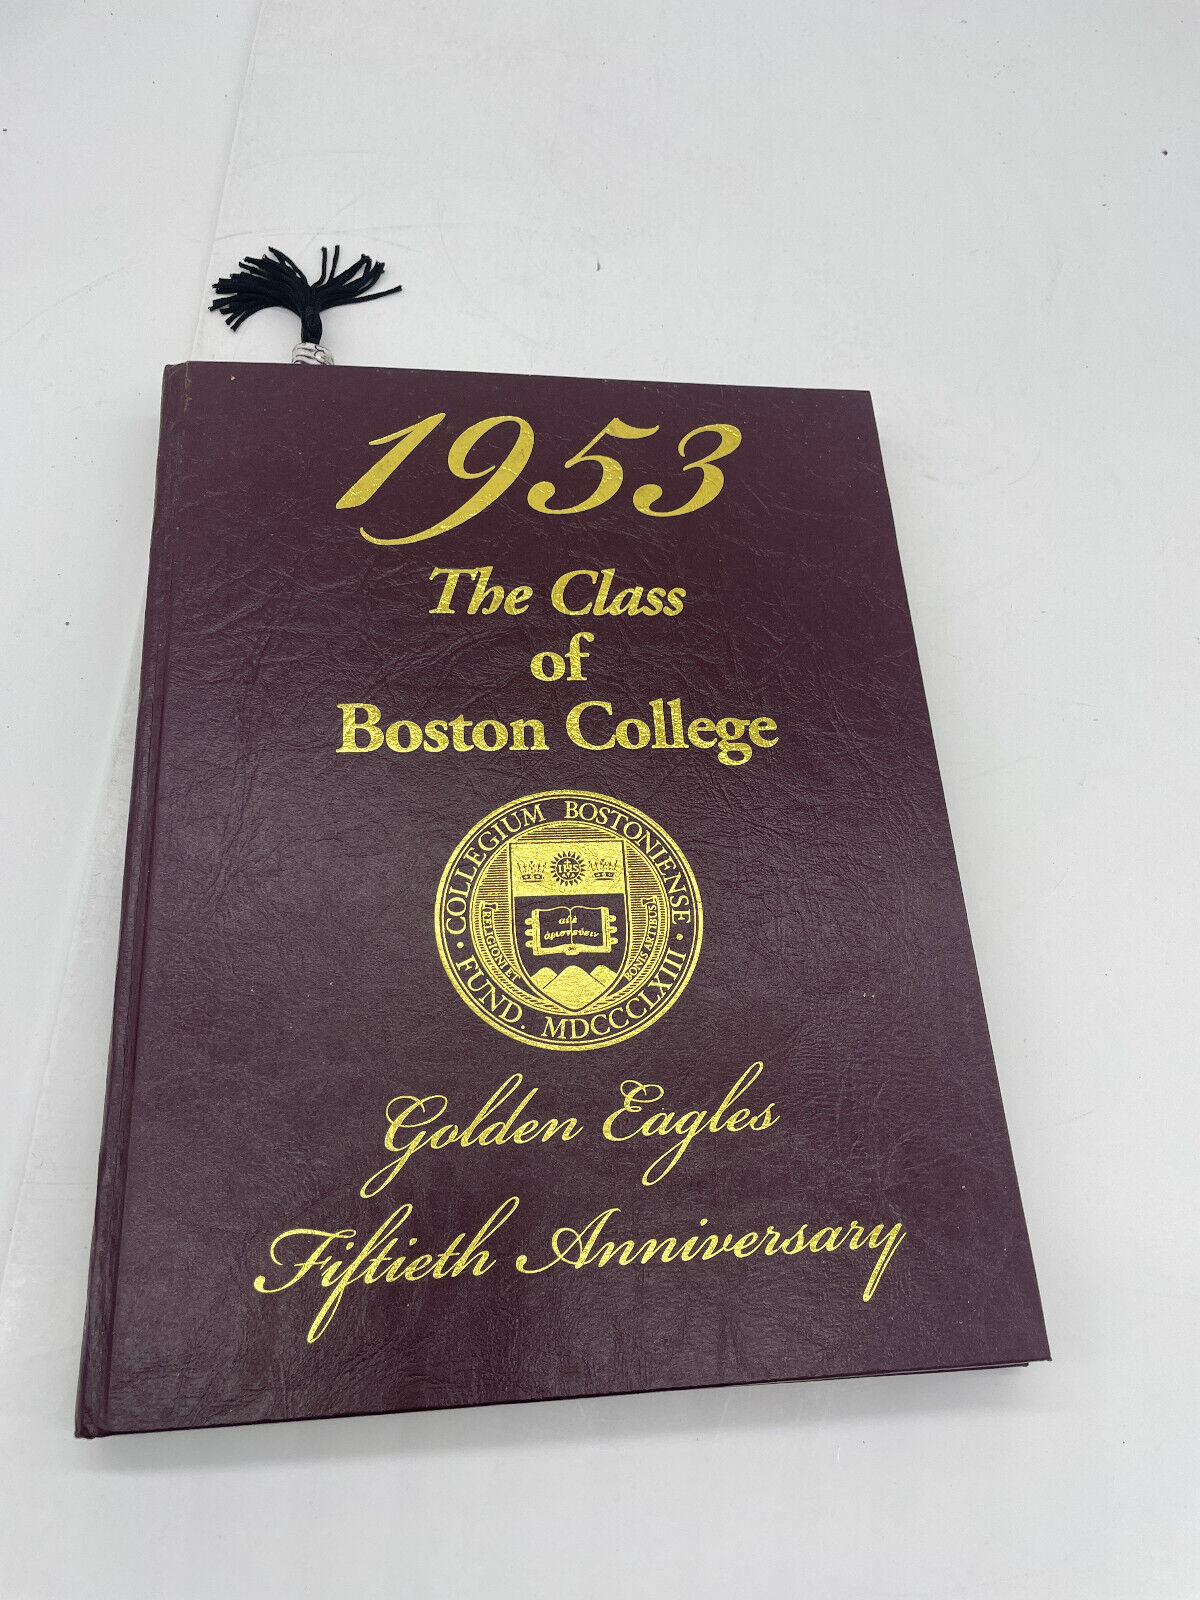 Boston College 1953 Yearbook Golden Eagles 50th rare Anniversary 2003